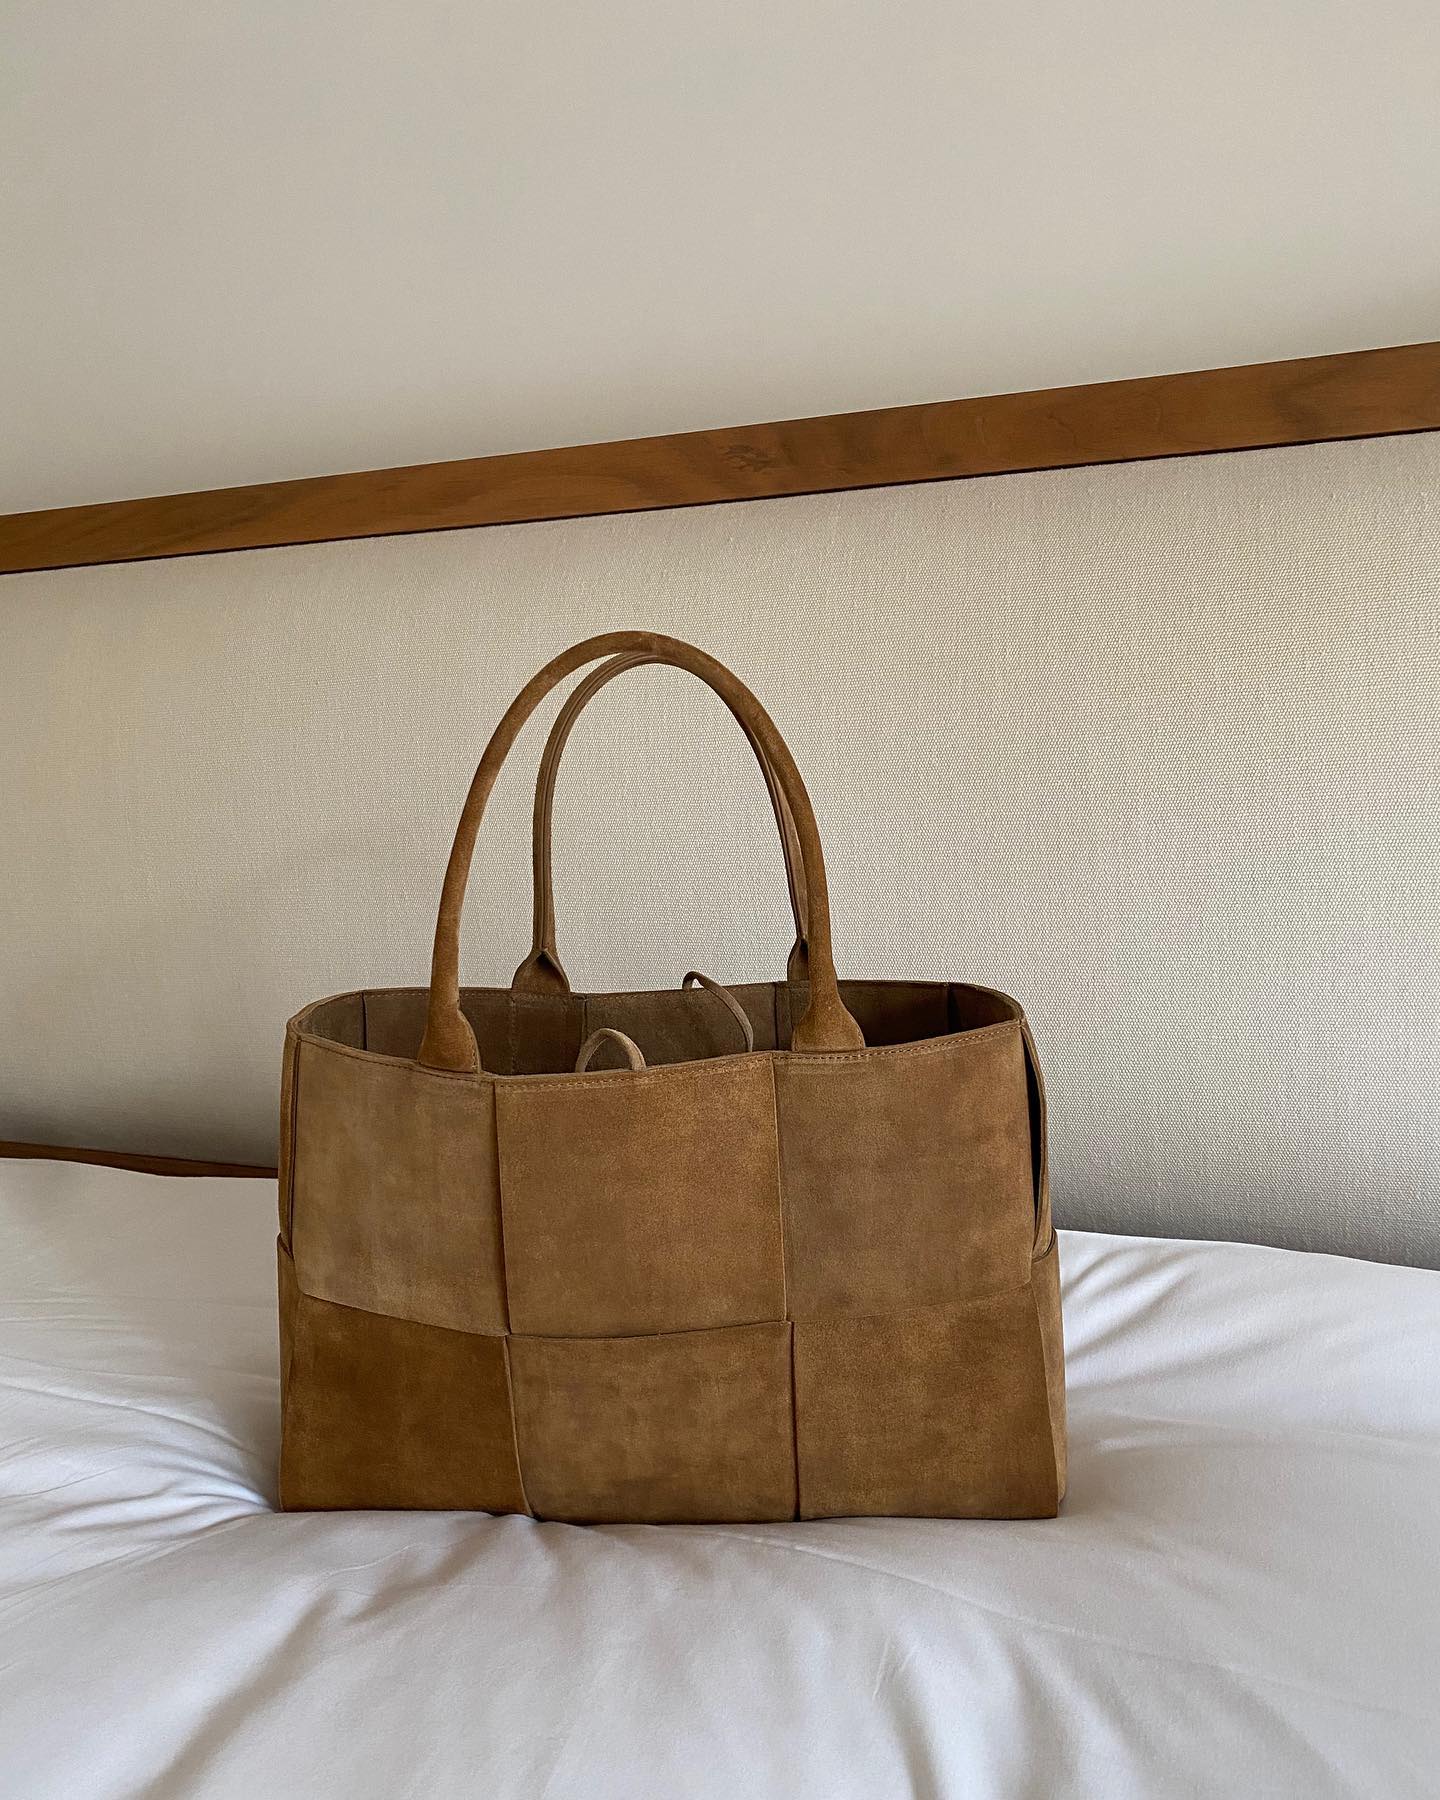 The Best Quiet Luxury Bags Under $350 To Buy Now